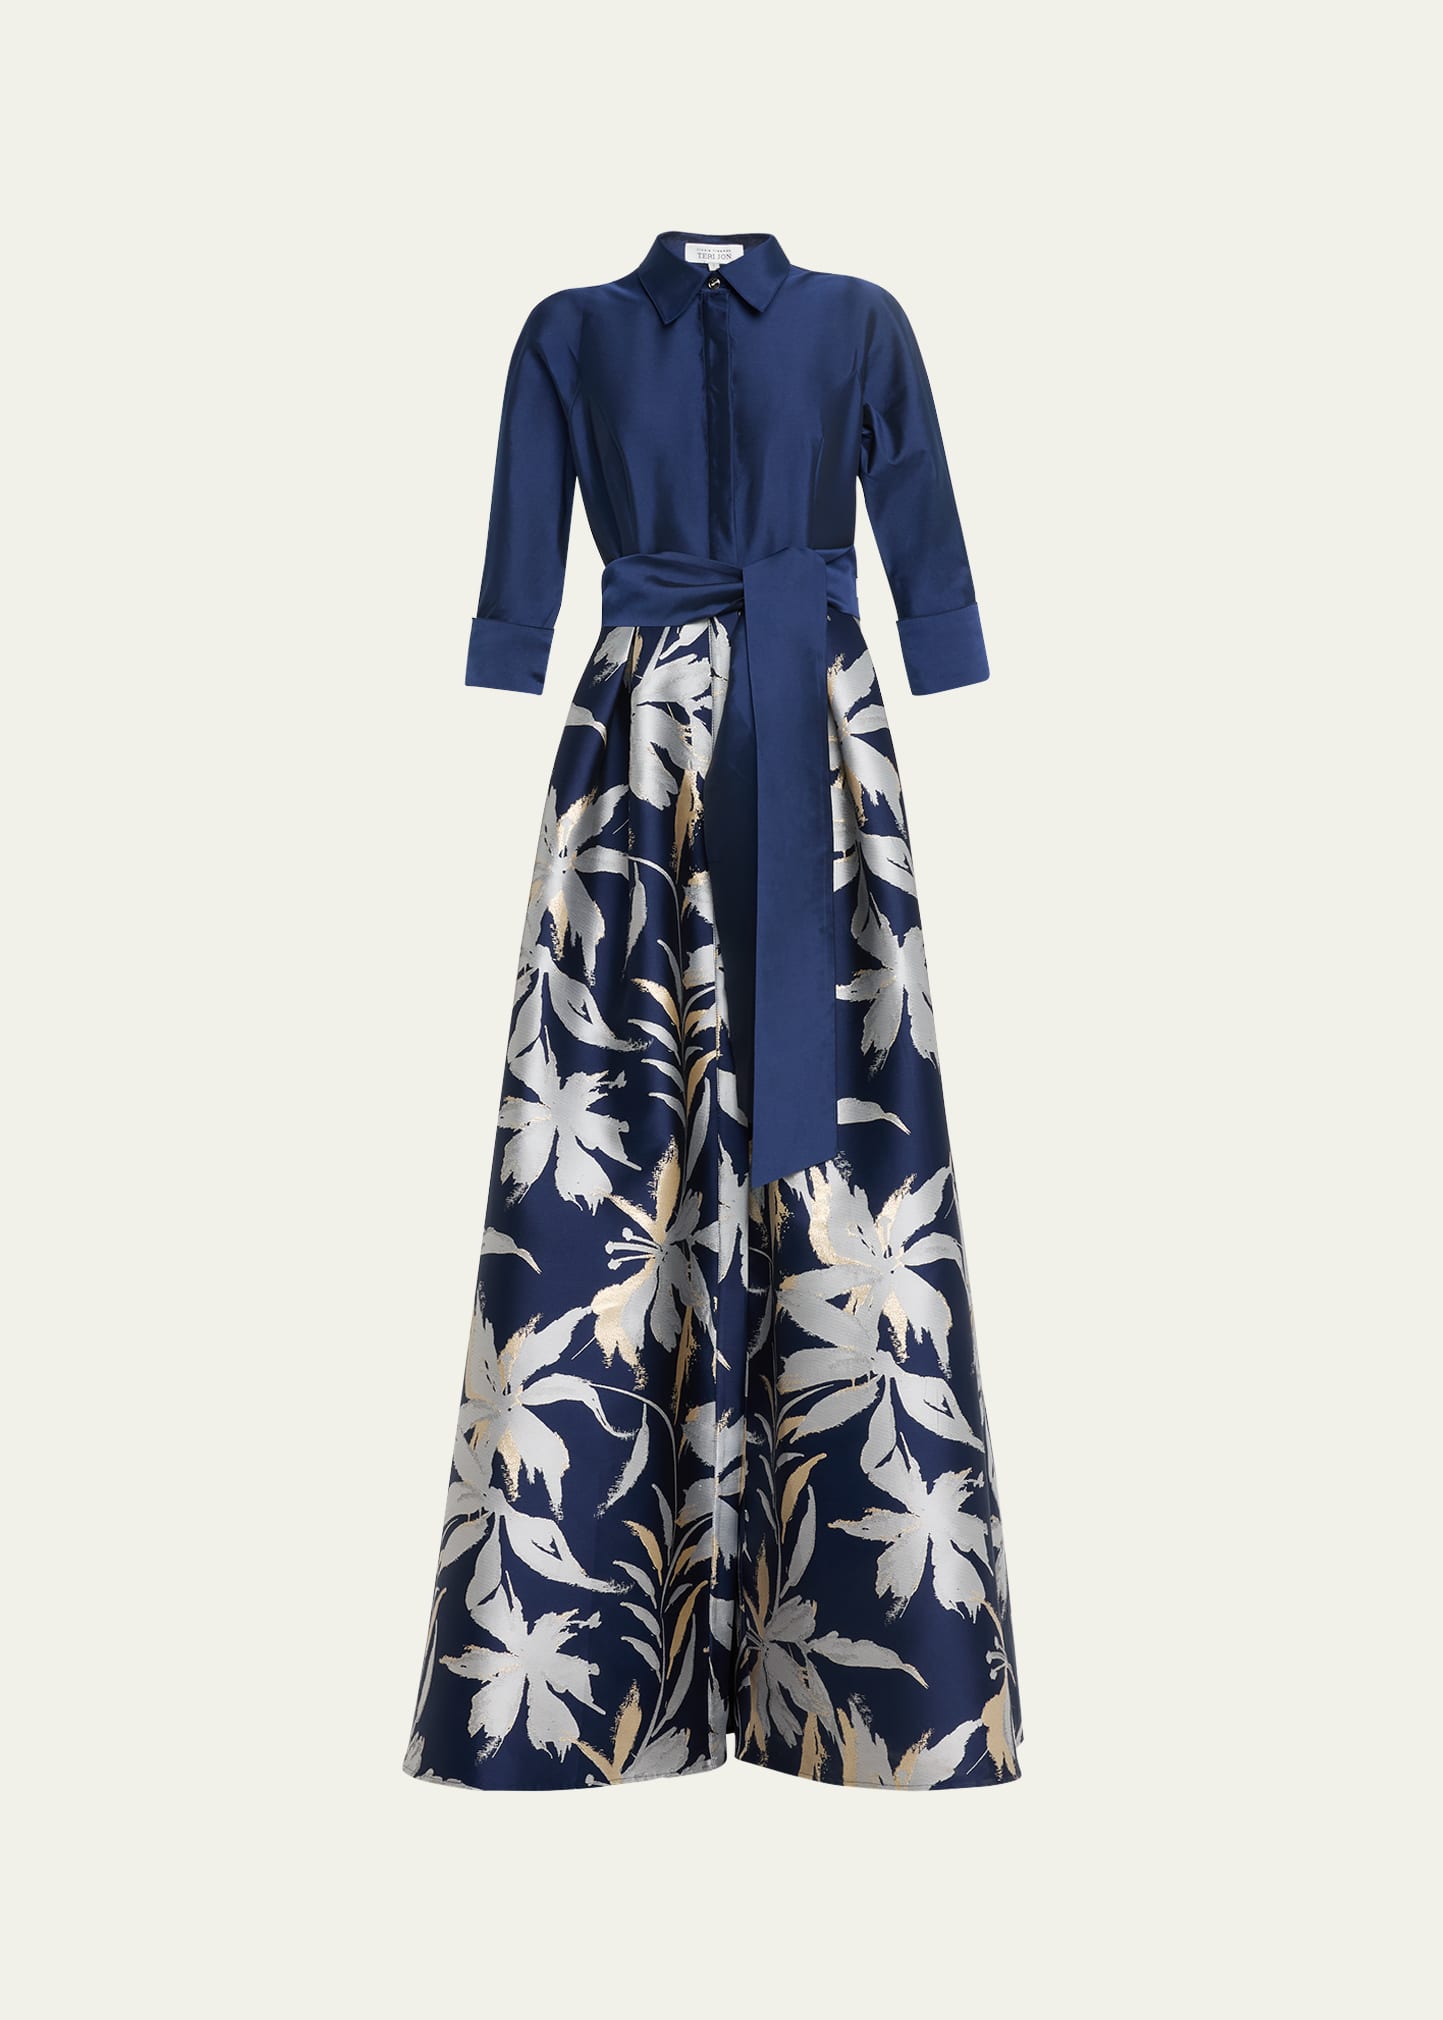 Rickie Freeman For Teri Jon 3/4-sleeve Floral Jacquard Shirt Gown In Navy Multi